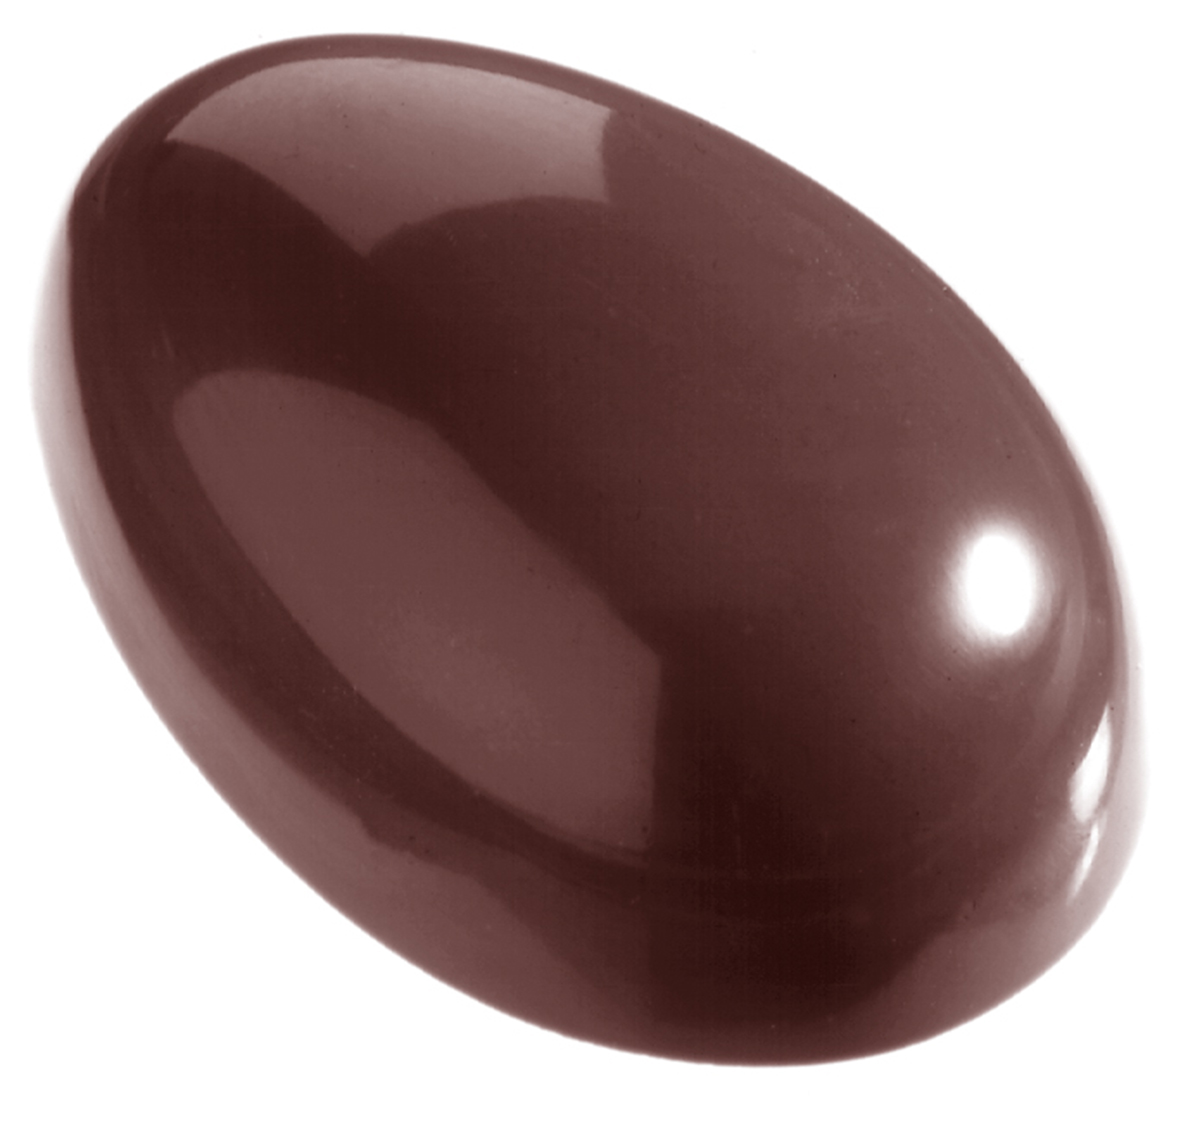 Professionel chokoladeform i polycarbonat - Egg smooth 7 cm CW1251